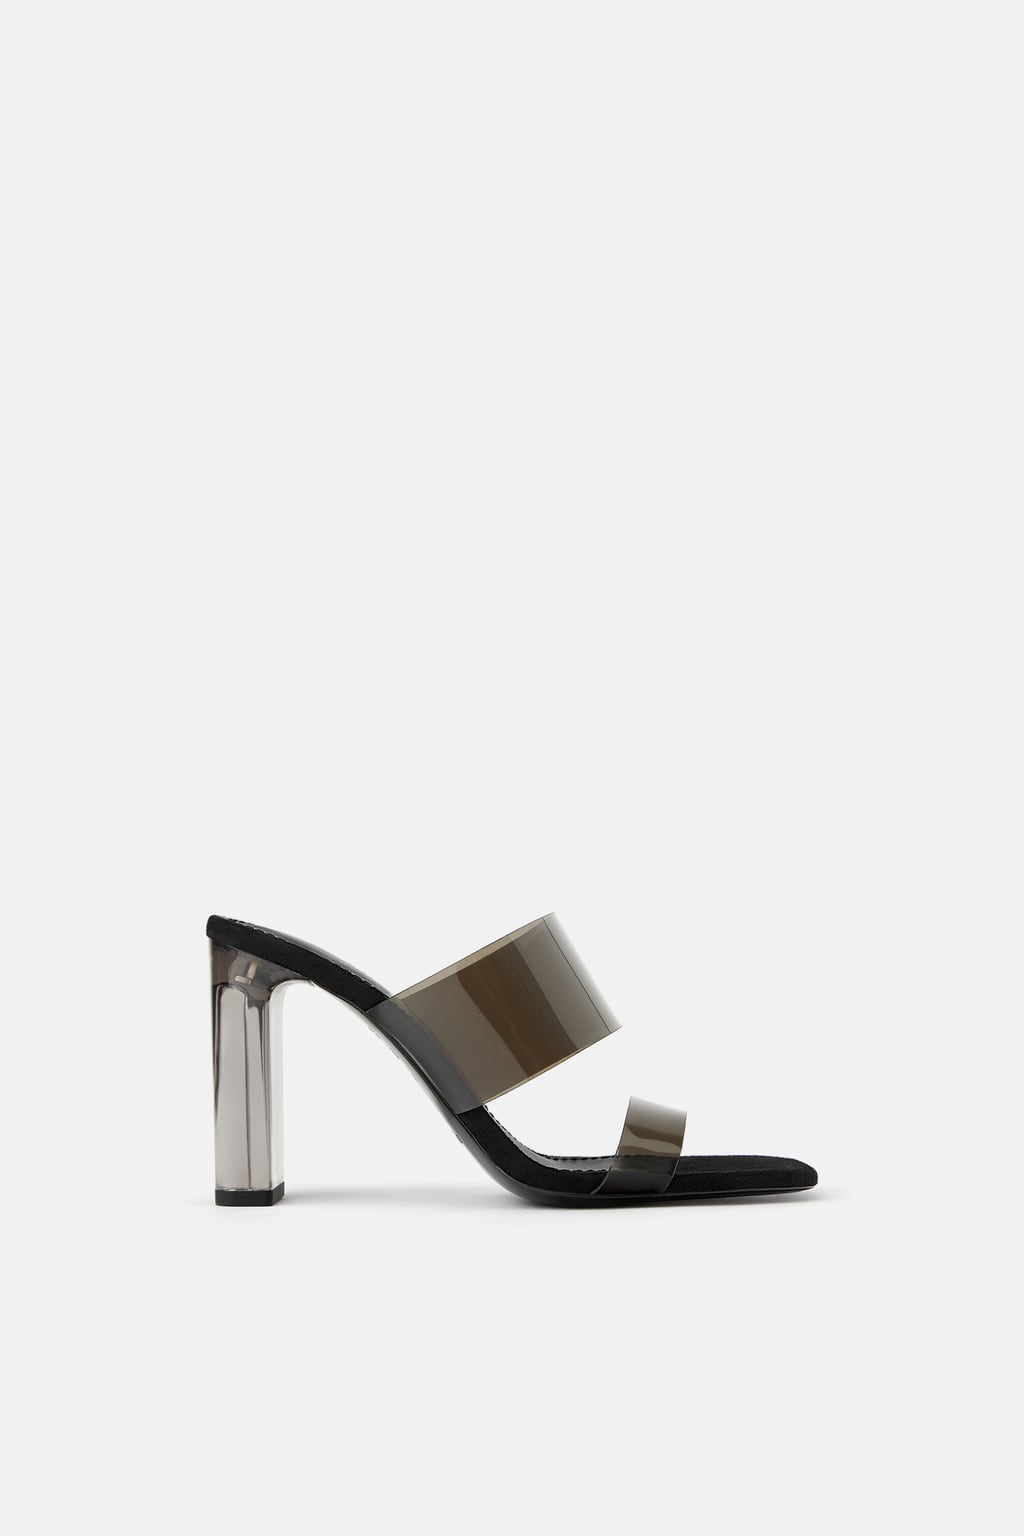 Zara | Shoes | Nwt Zara Vinyl High Heels Black | Poshmark